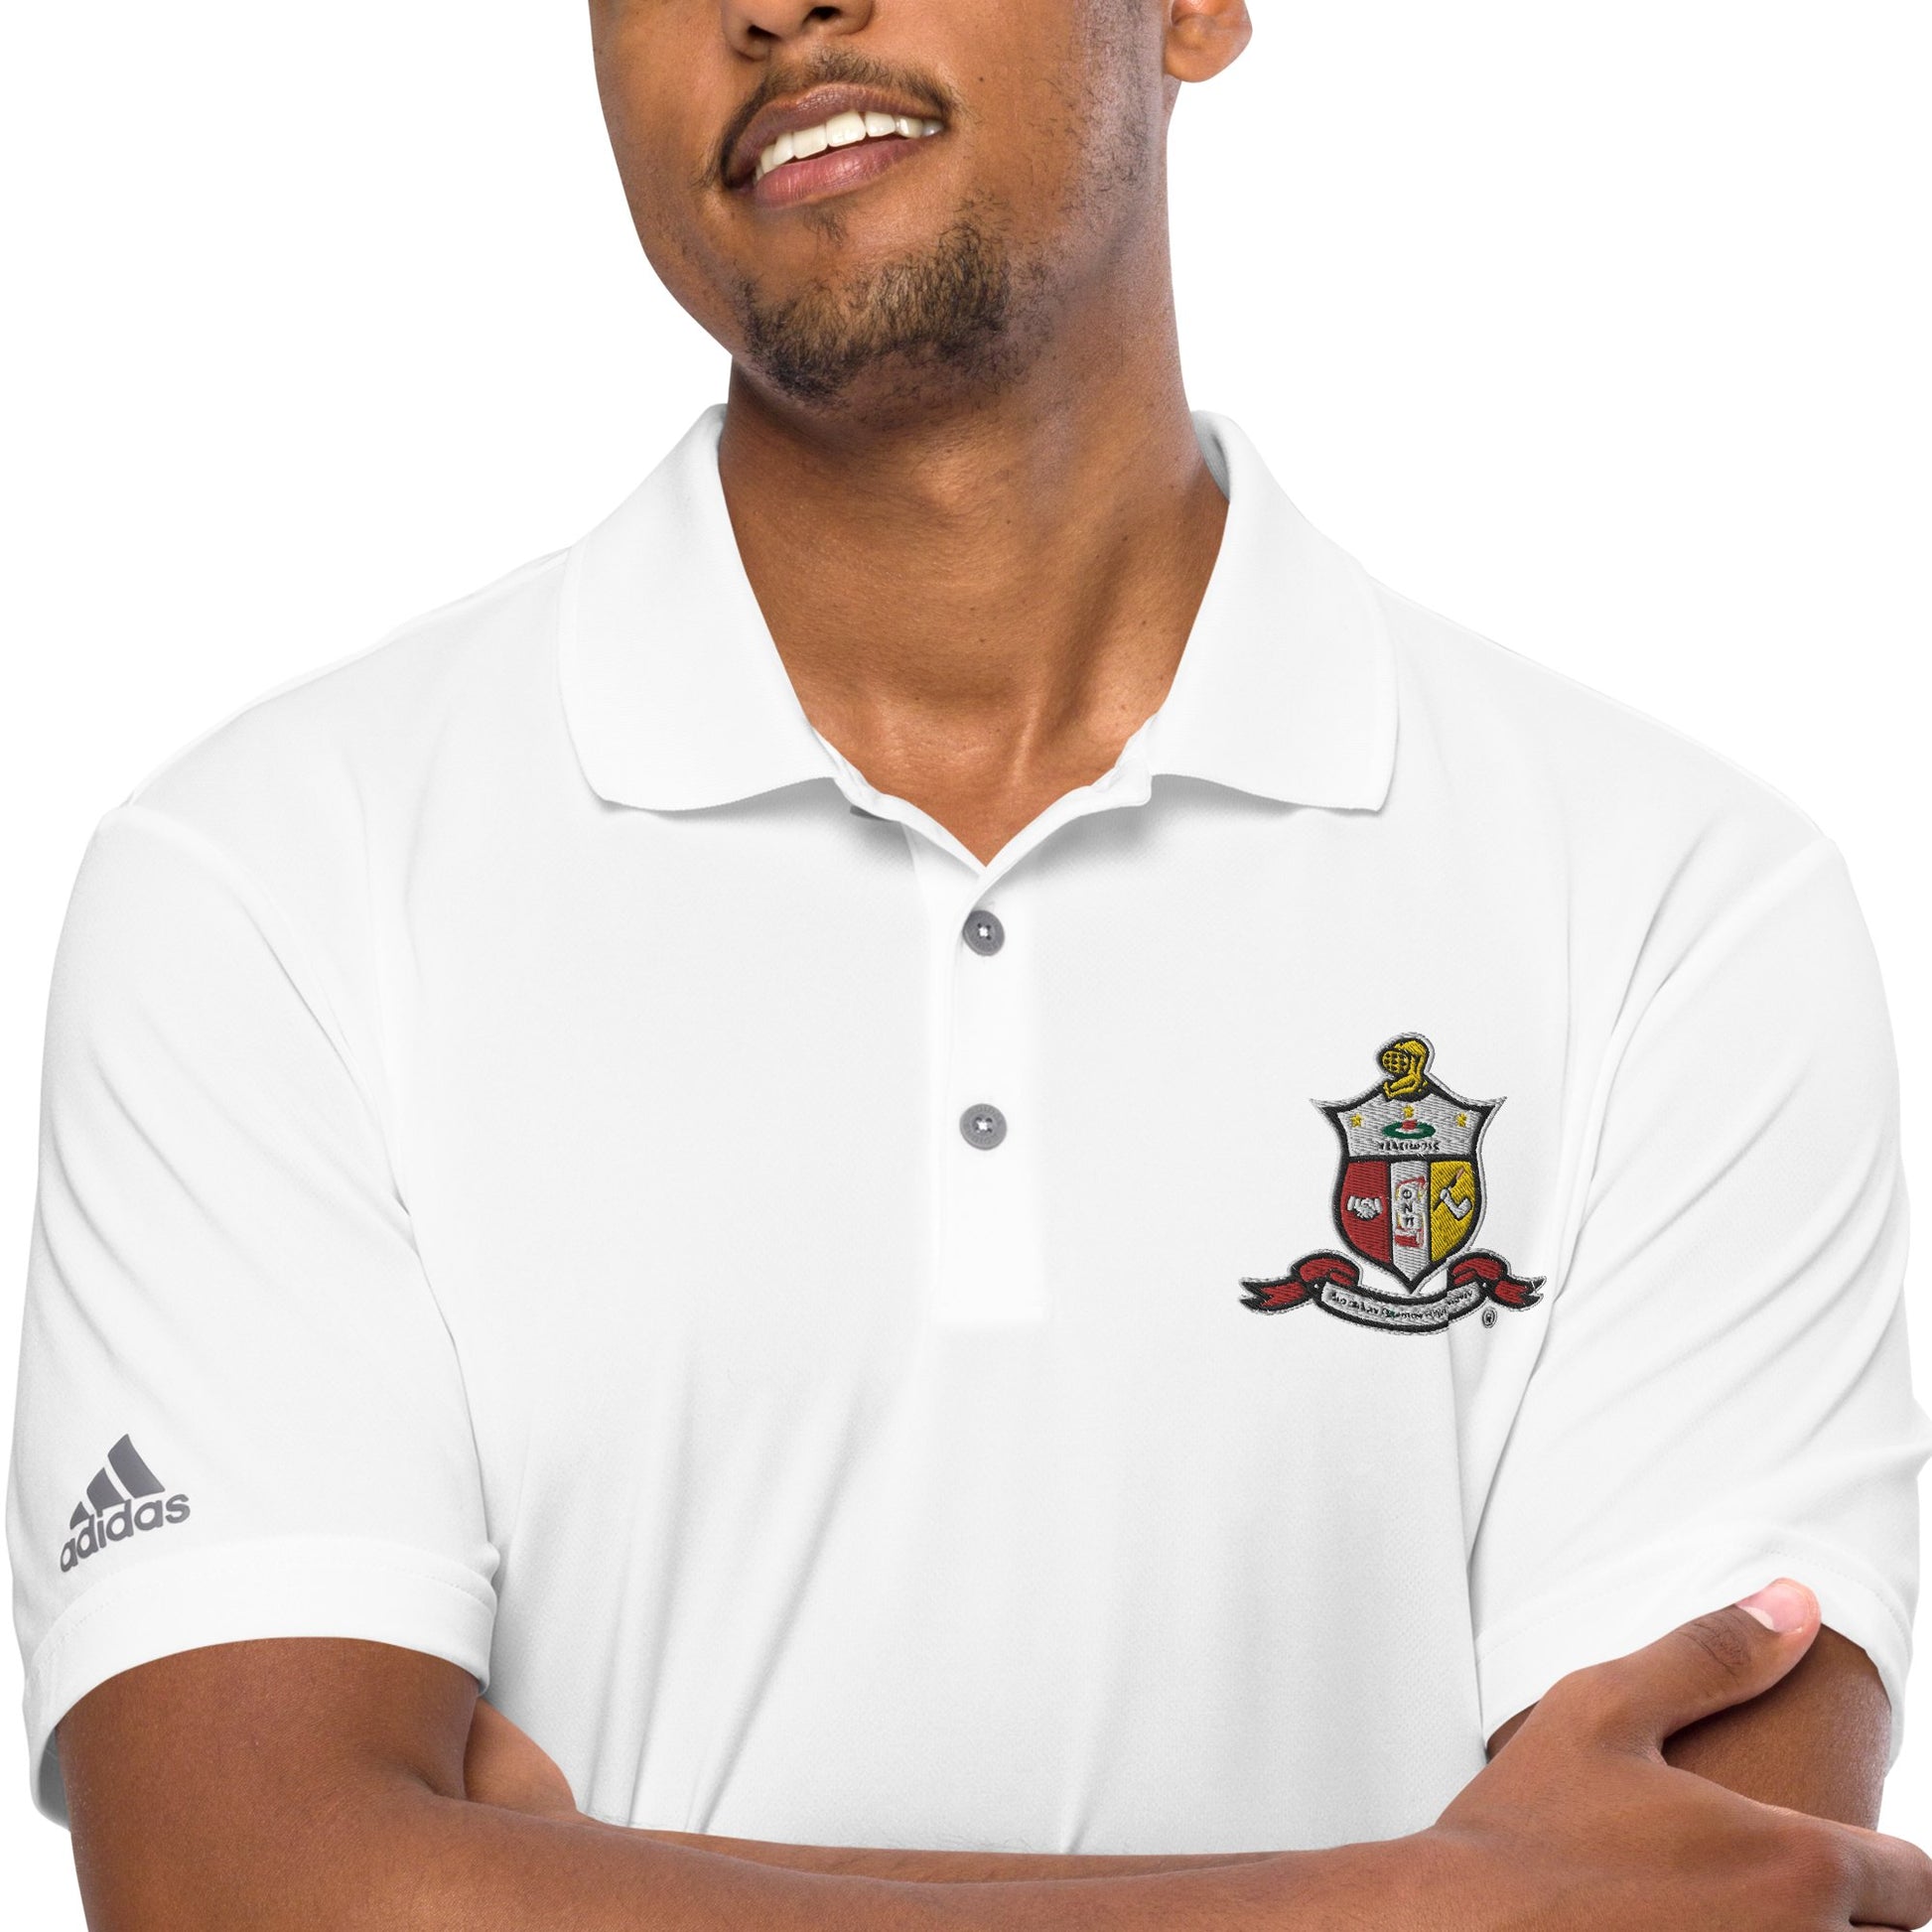 Kappa Shield adidas performance golf shirt - URBrand